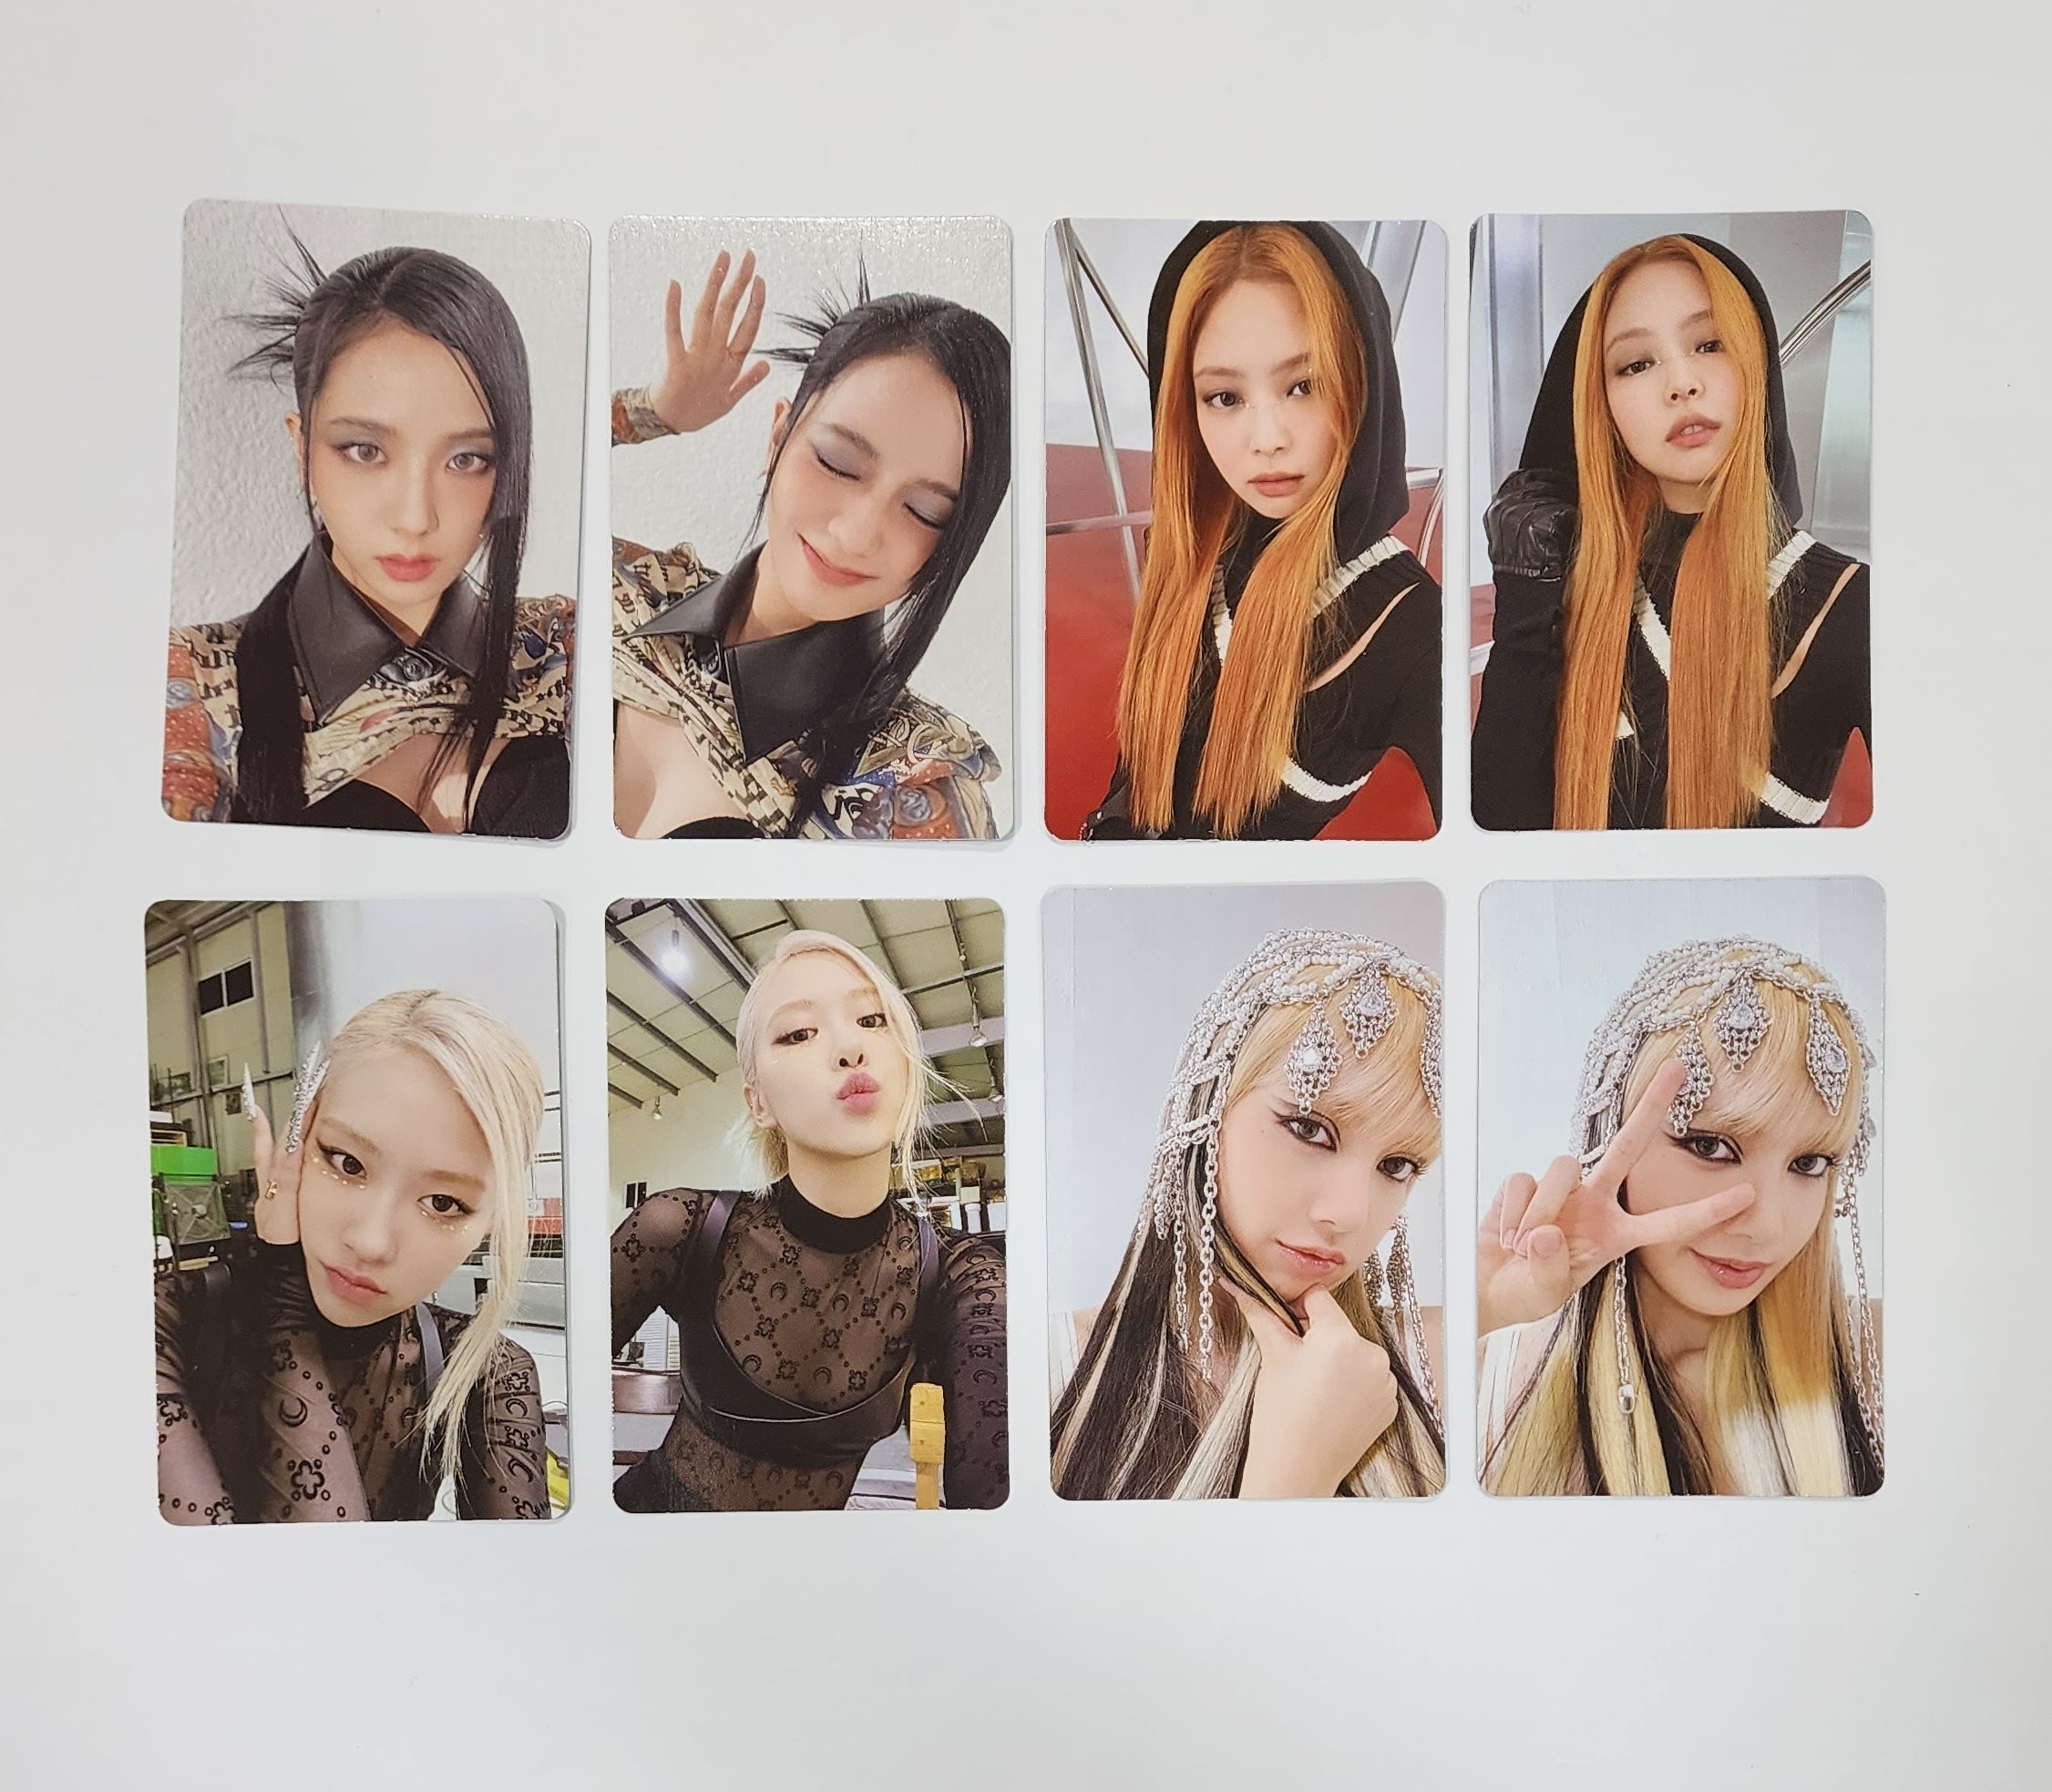 16Pcs Kpop Blackpink SQUARE UP Photo Card Poster Lomo Cards Set LISA JISOO  New Mini 1st Album HD Autographed Photocard